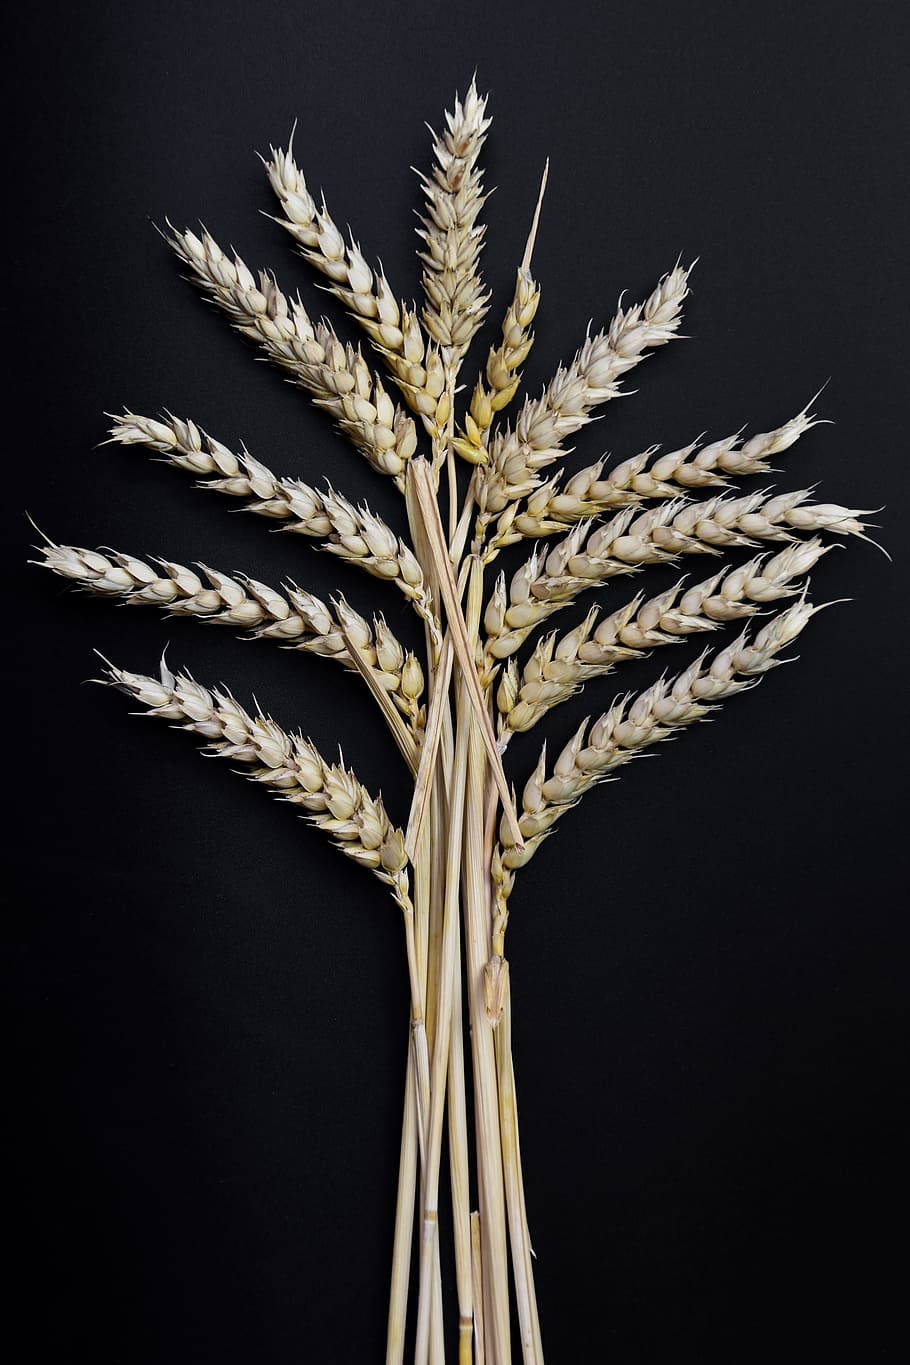 ear, grain, corn on the cob, wheat, klasky, studio shot, close-up